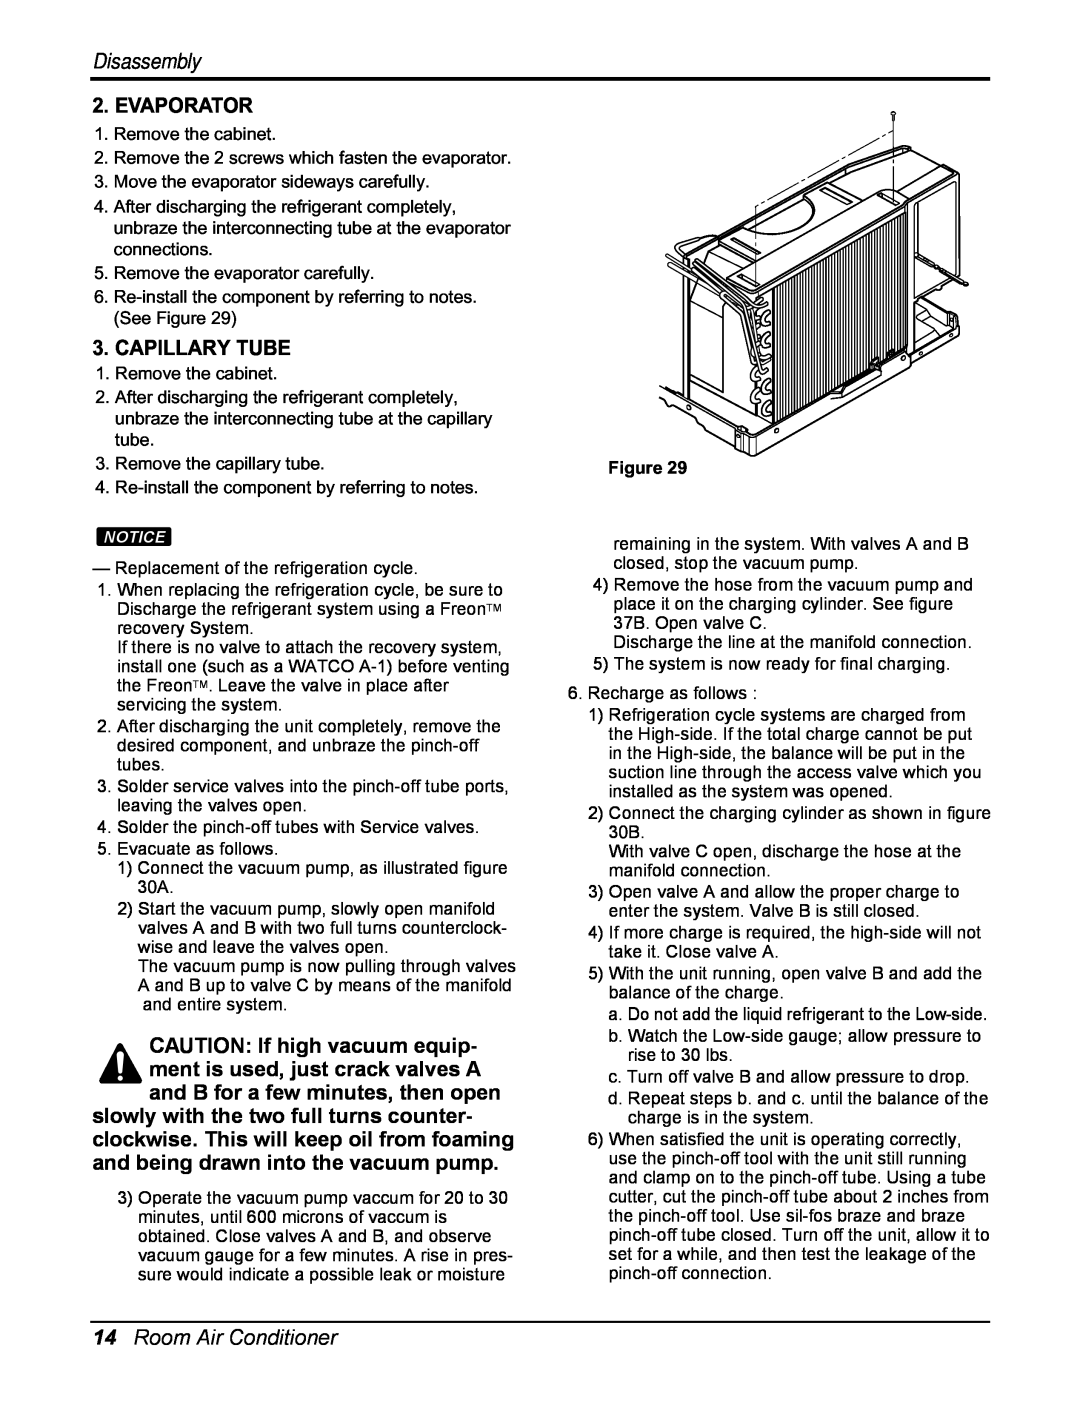 Friedrich CP10E10, CP12E10 manual Evaporator, Capillary Tube, Room Air Conditioner, Disassembly 